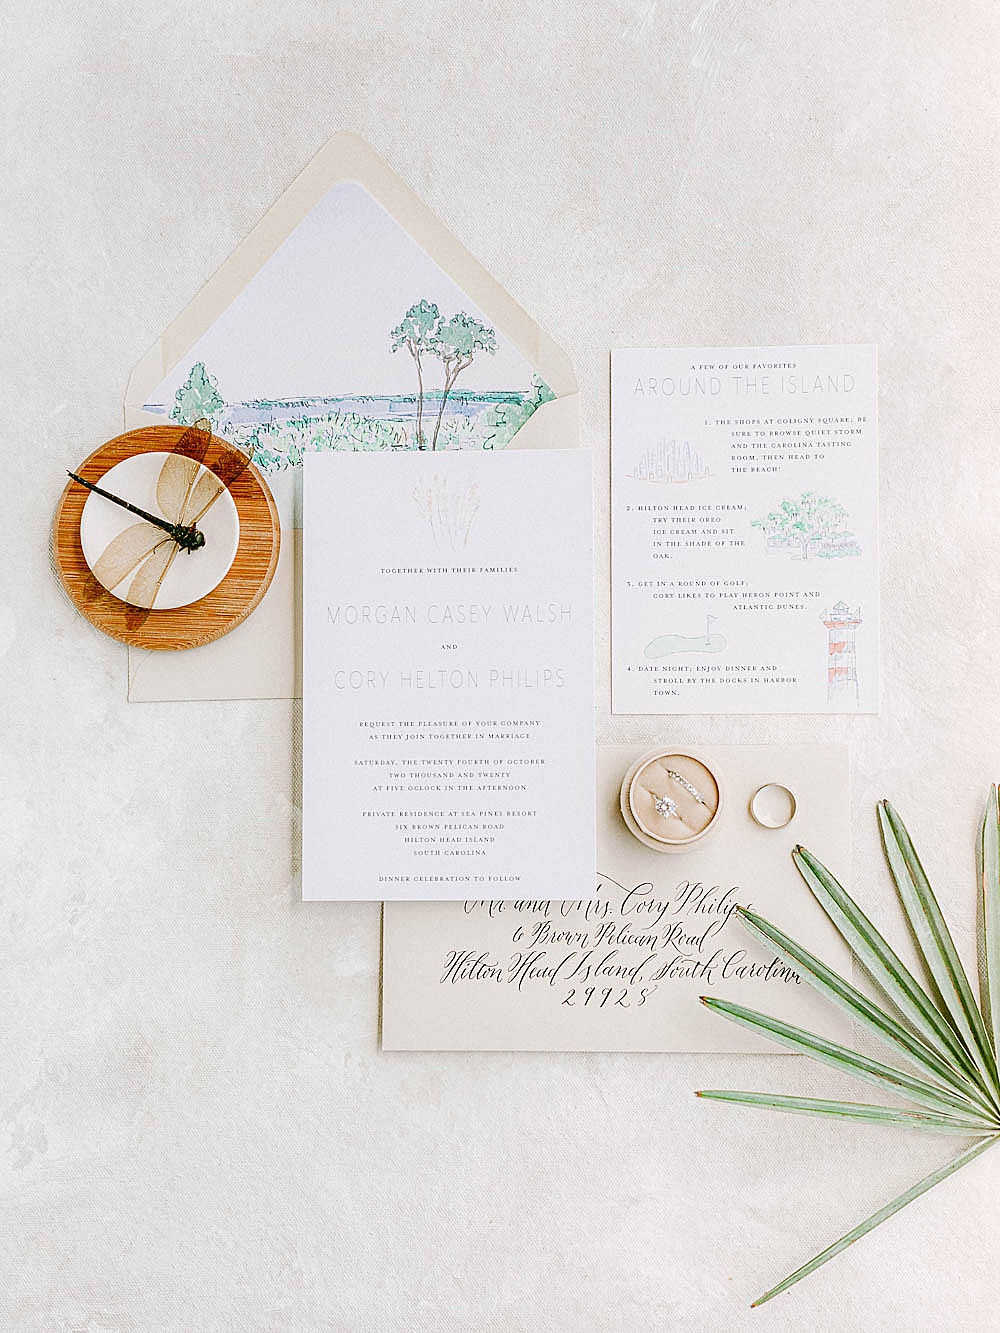 Custom wedding invitation for a Sea Pines Wedding